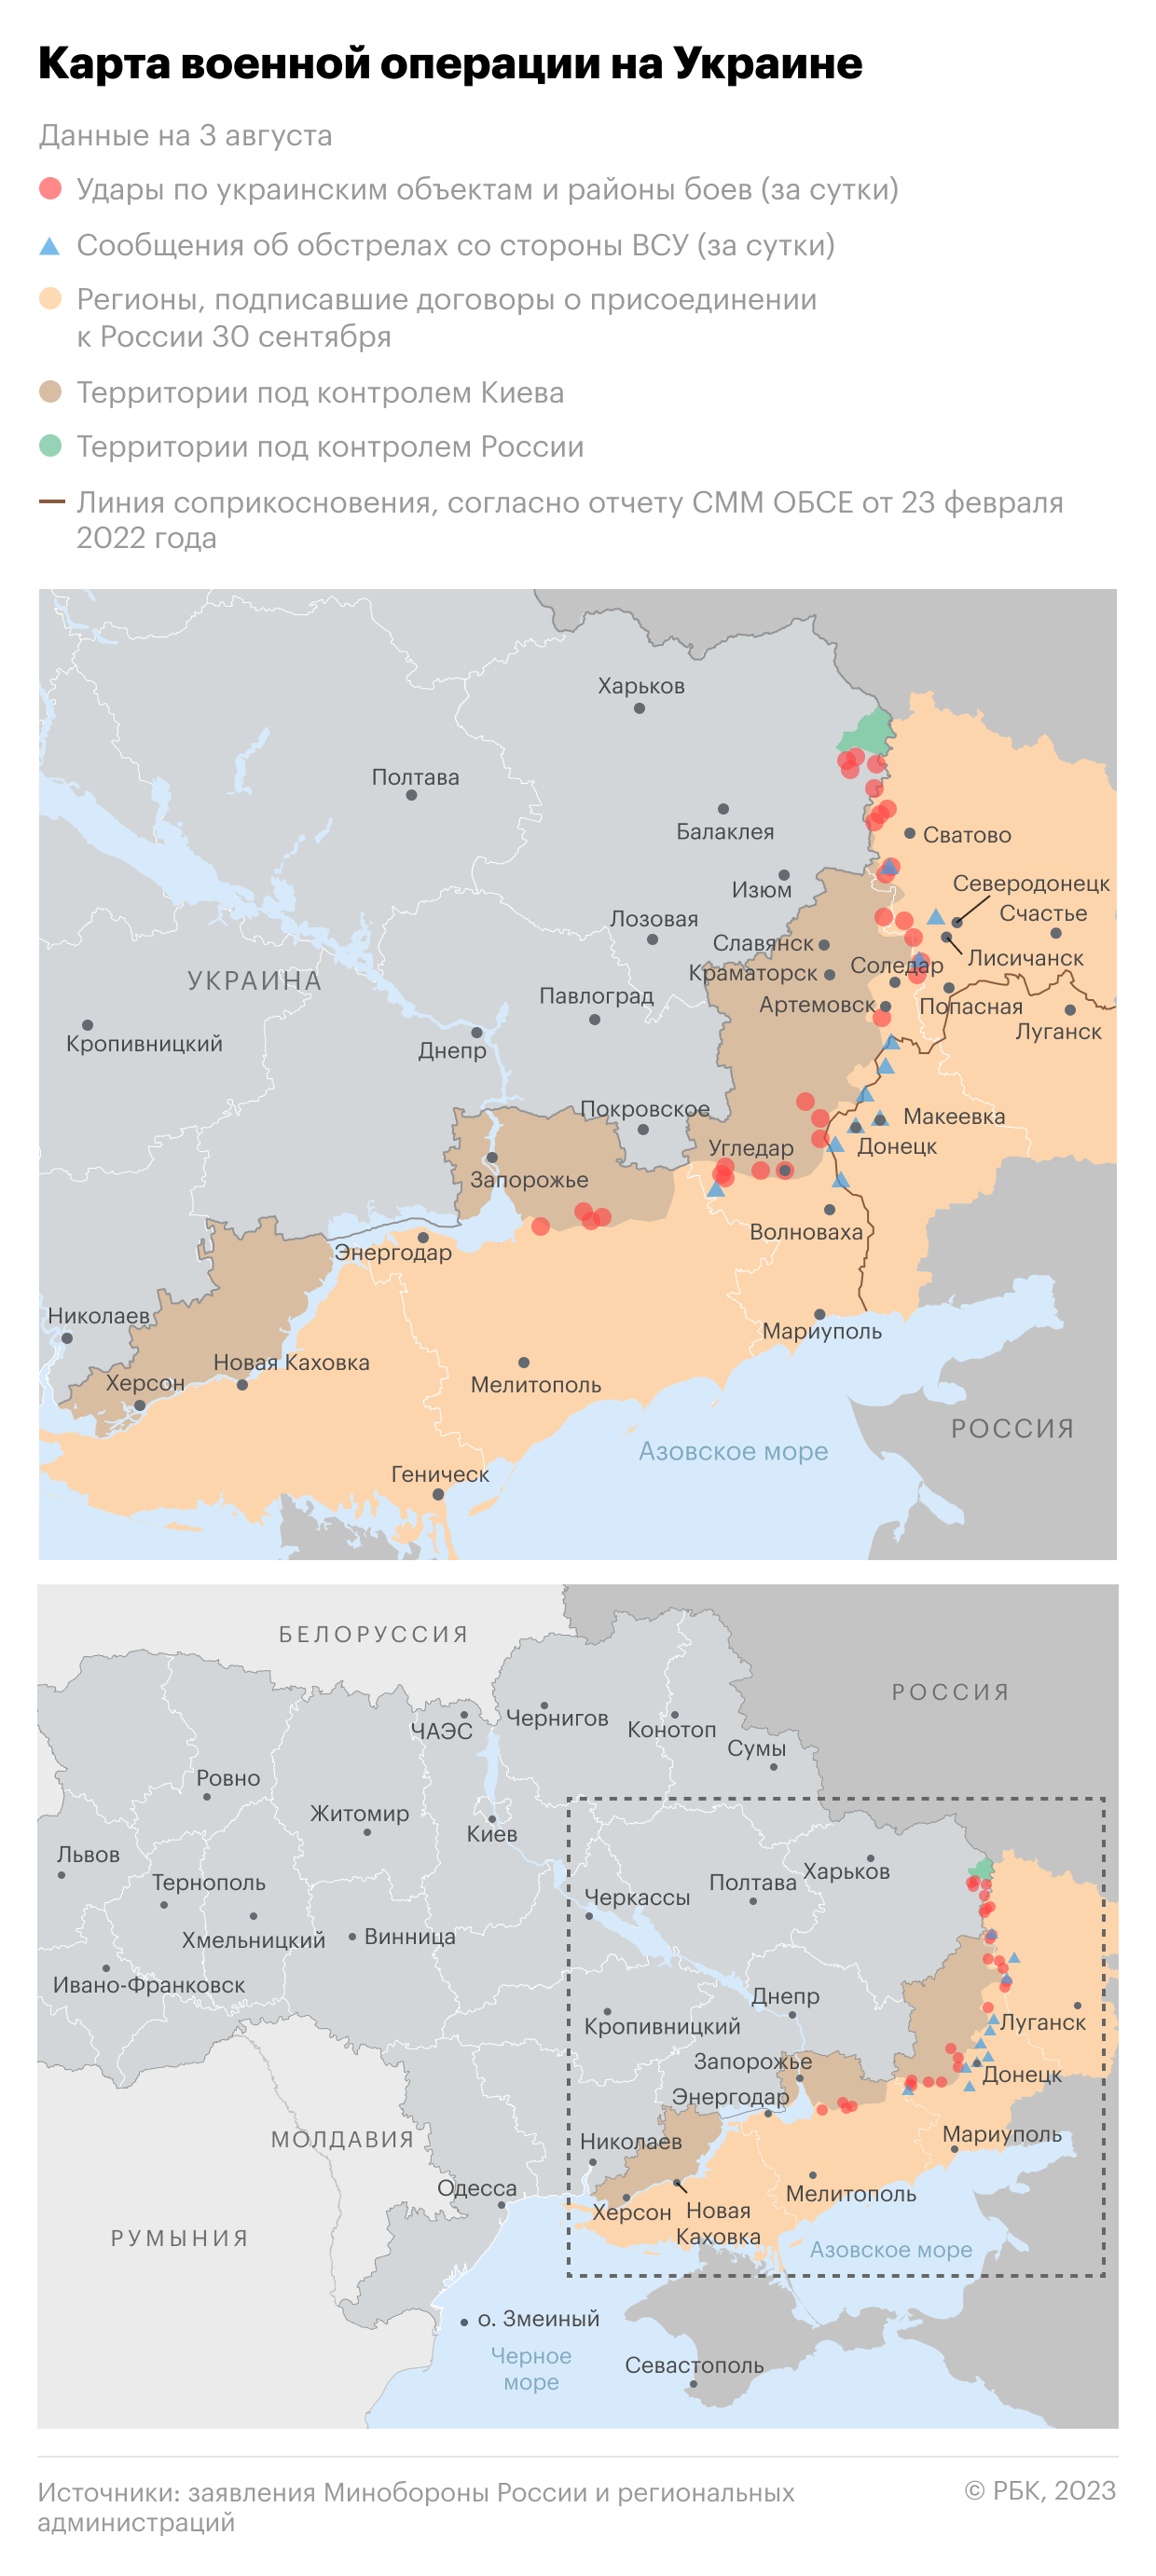 Военная операция на Украине. Карта на 3 августа"/>













